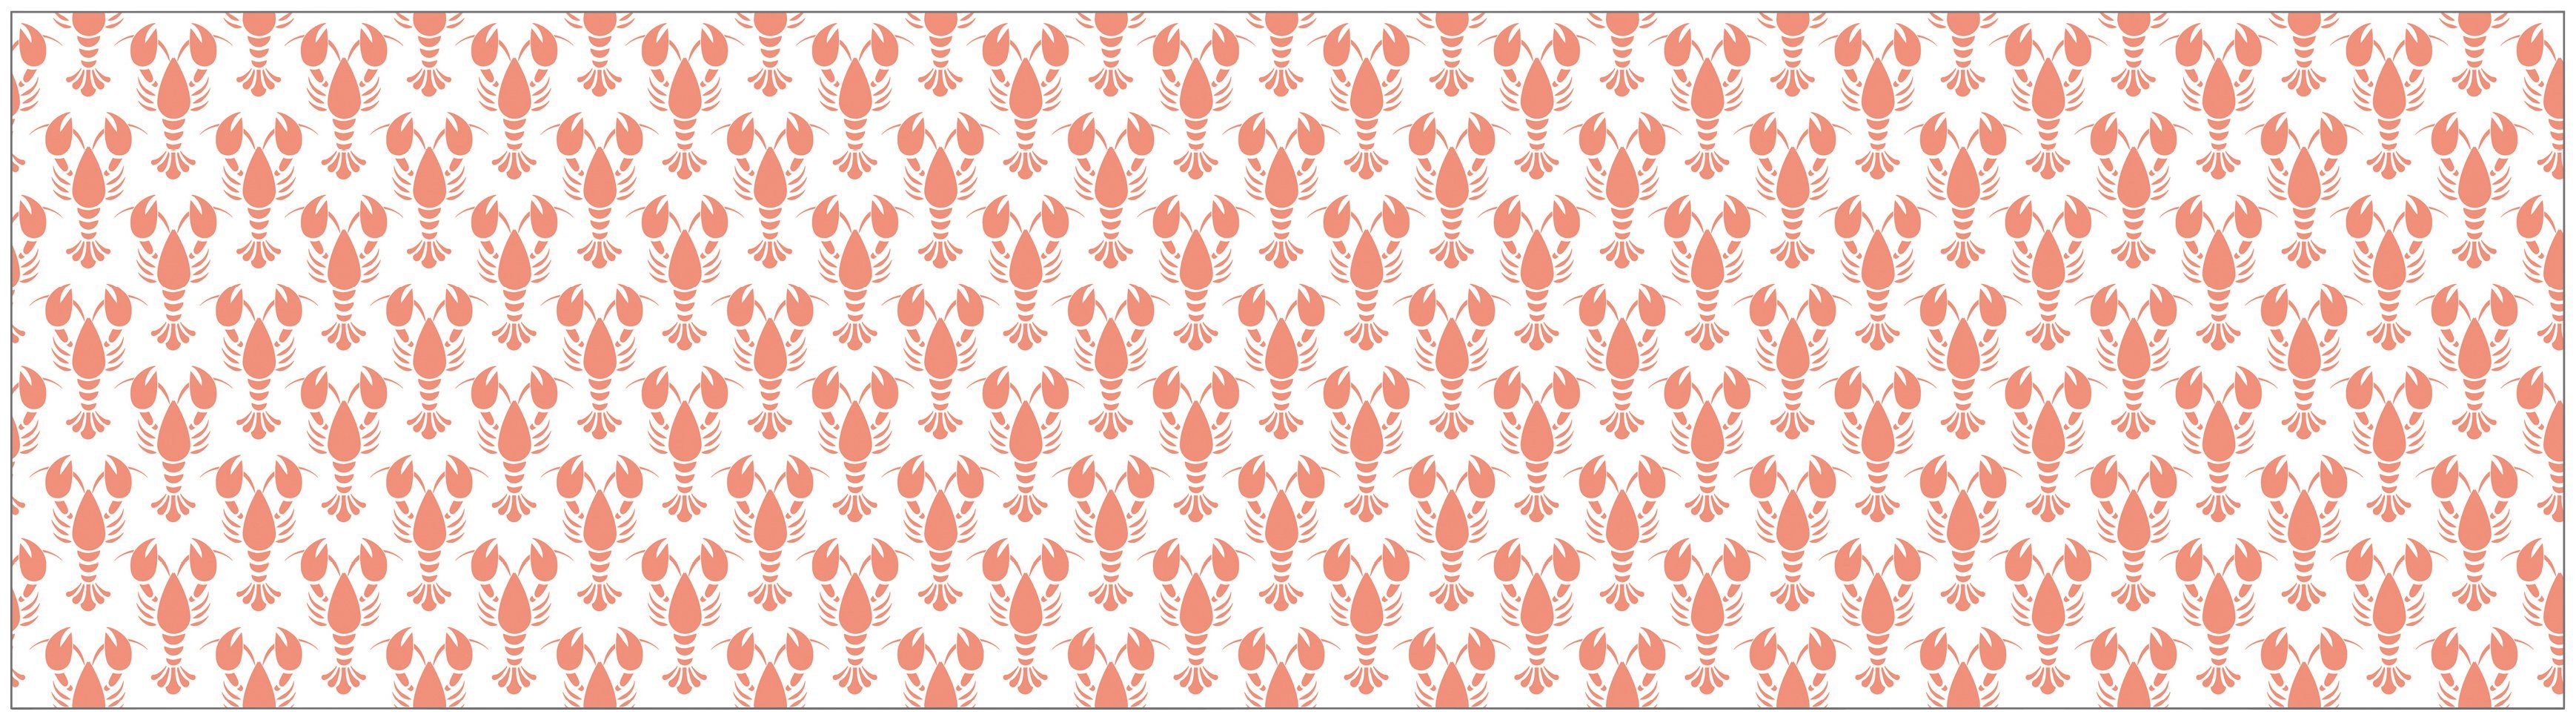 MySpotti Küchenrückwand fixy Lobster Patern, selbstklebende und flexible Küchenrückwand-Folie rot